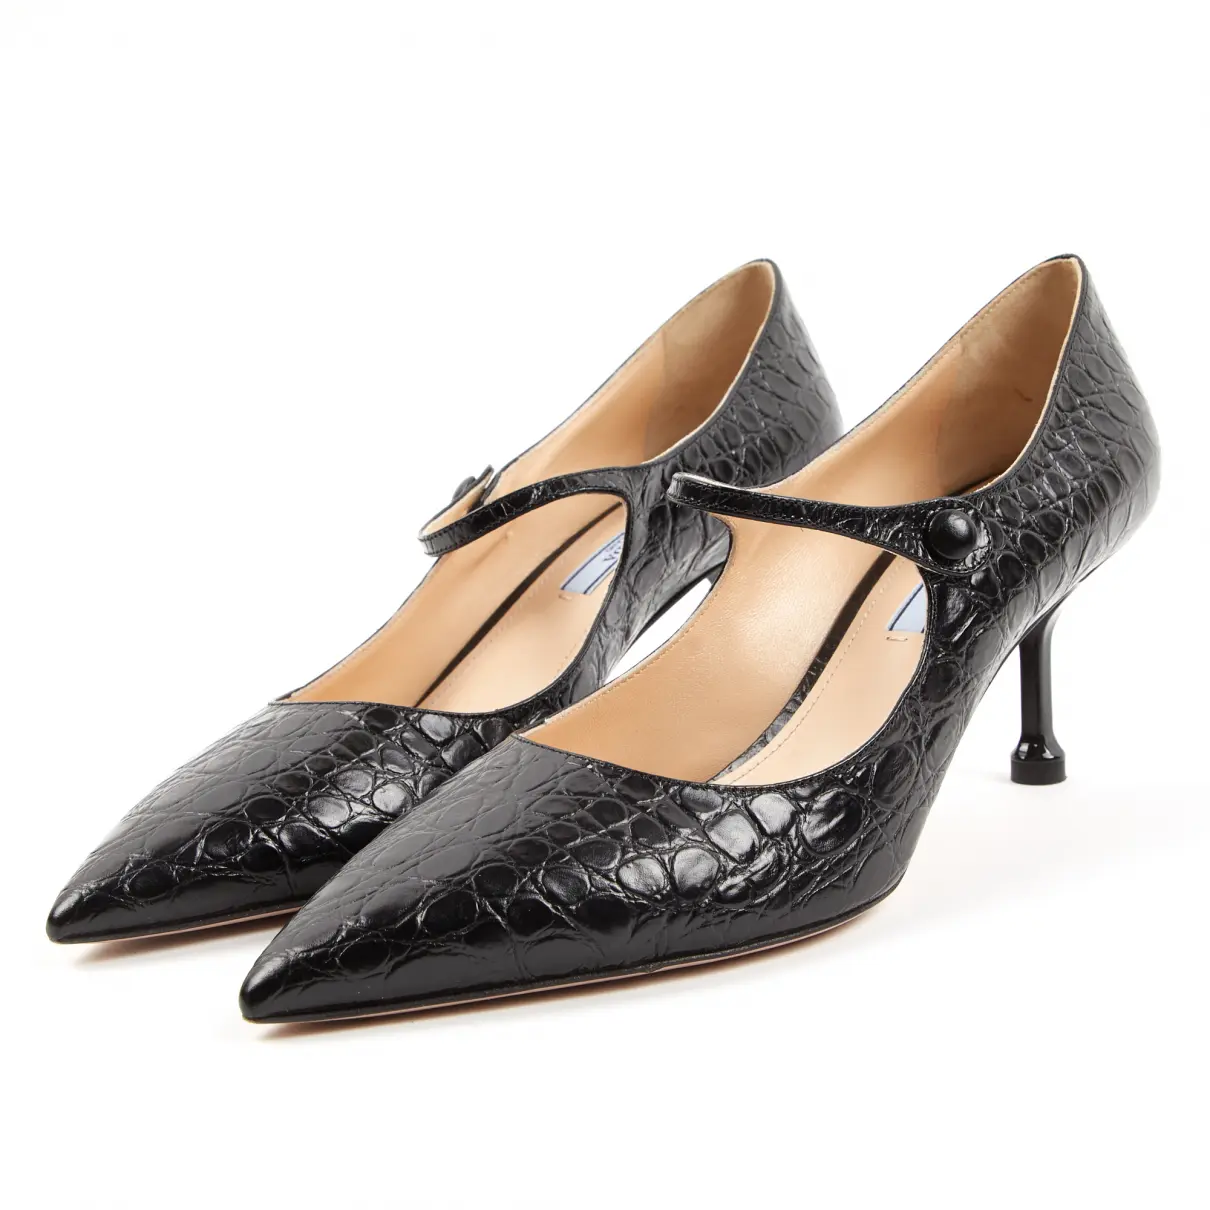 Buy Prada Mary Jane leather heels online